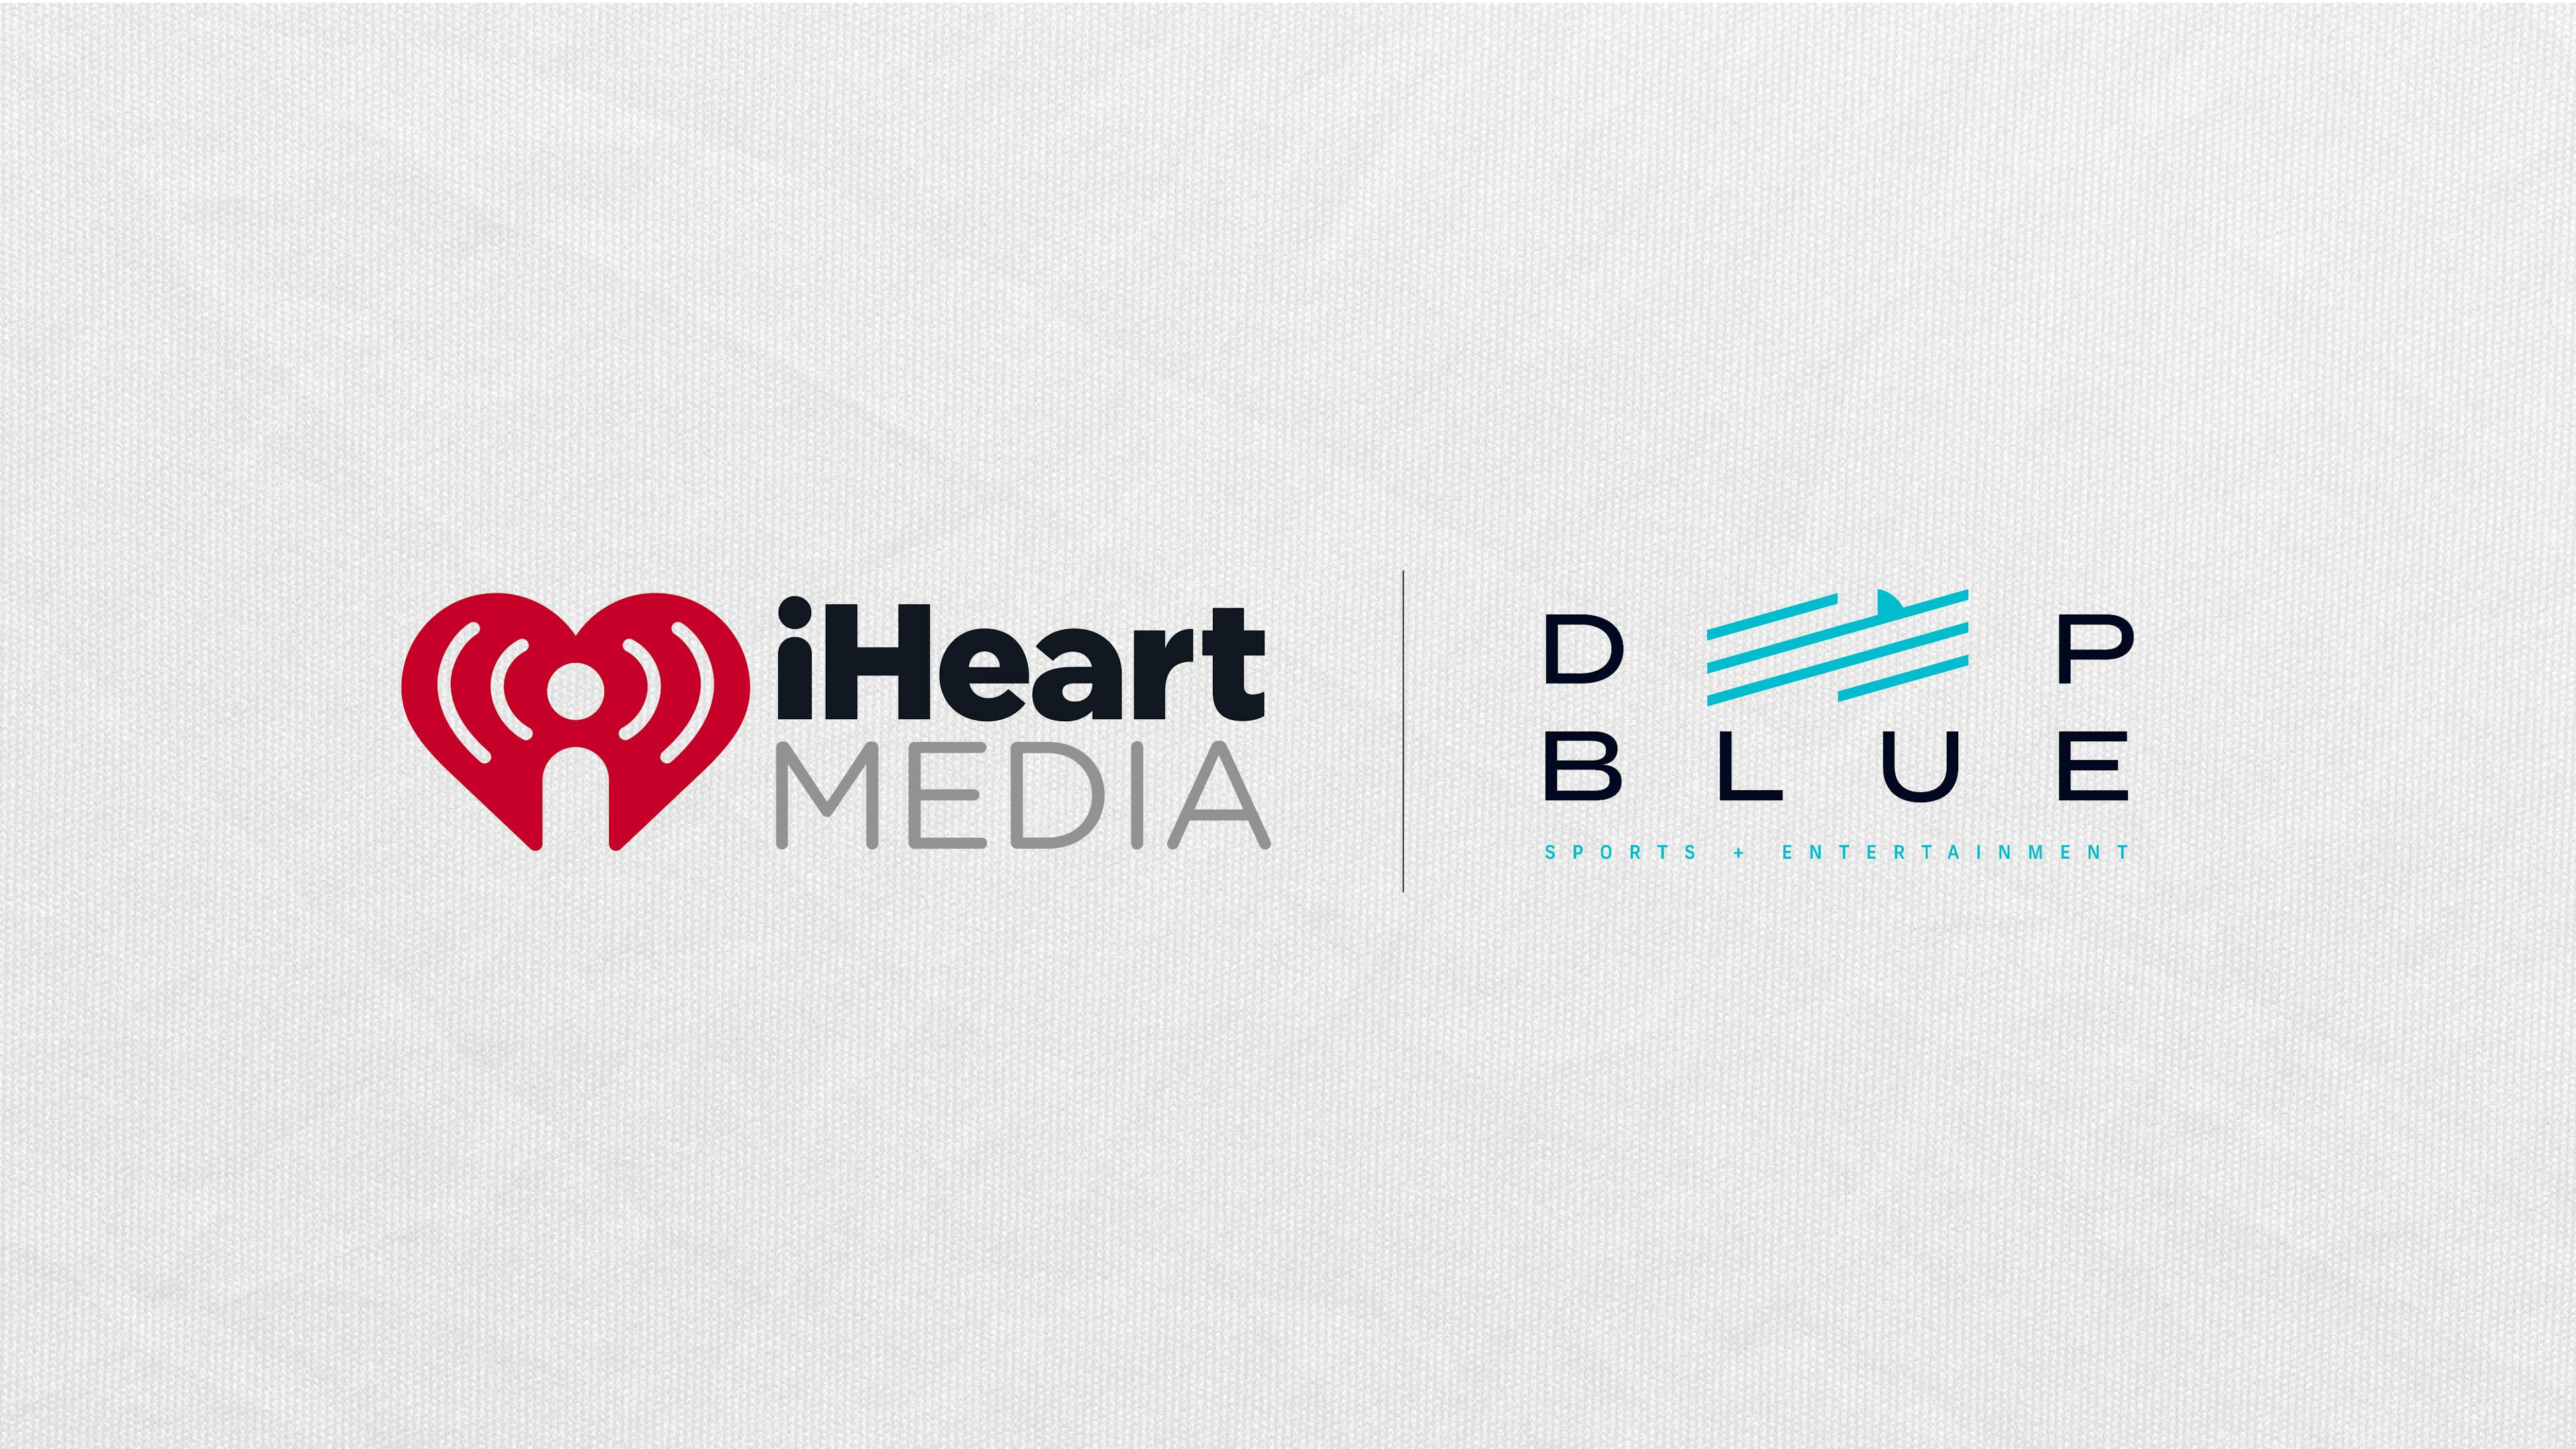 Deep Blue and iHeartMedia logos